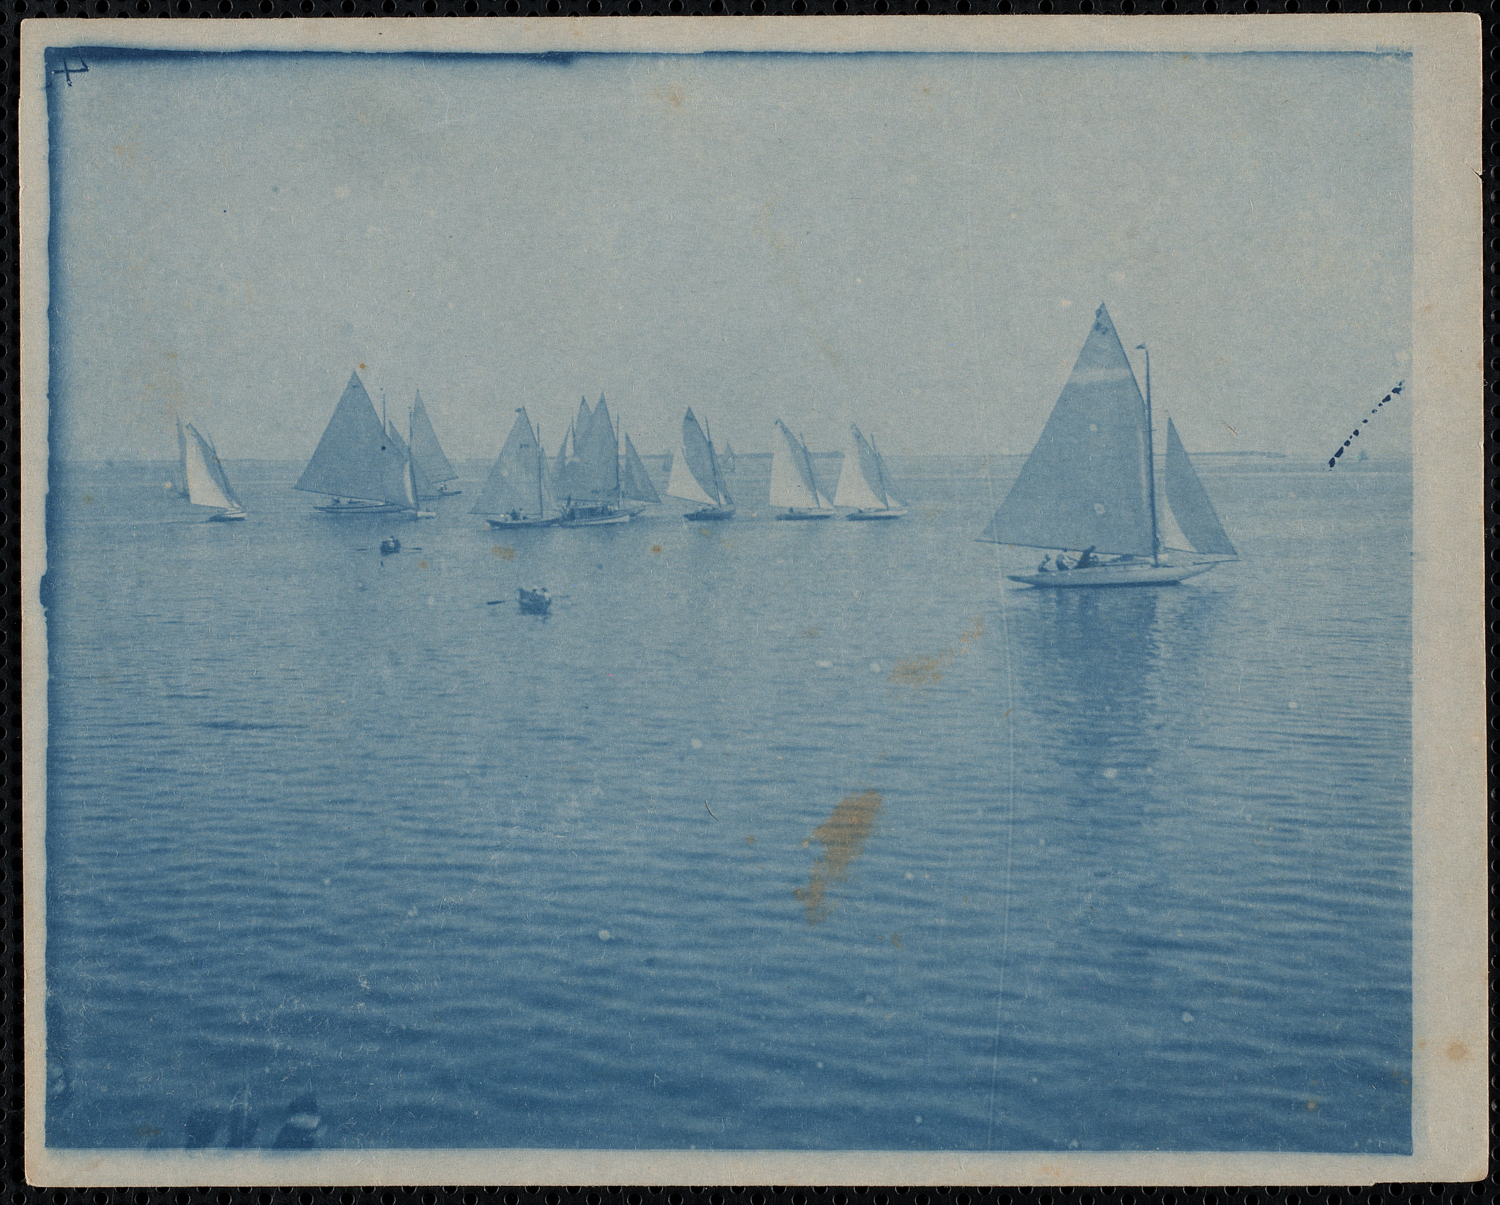 Regatta on Kingston Bay, circa 1905